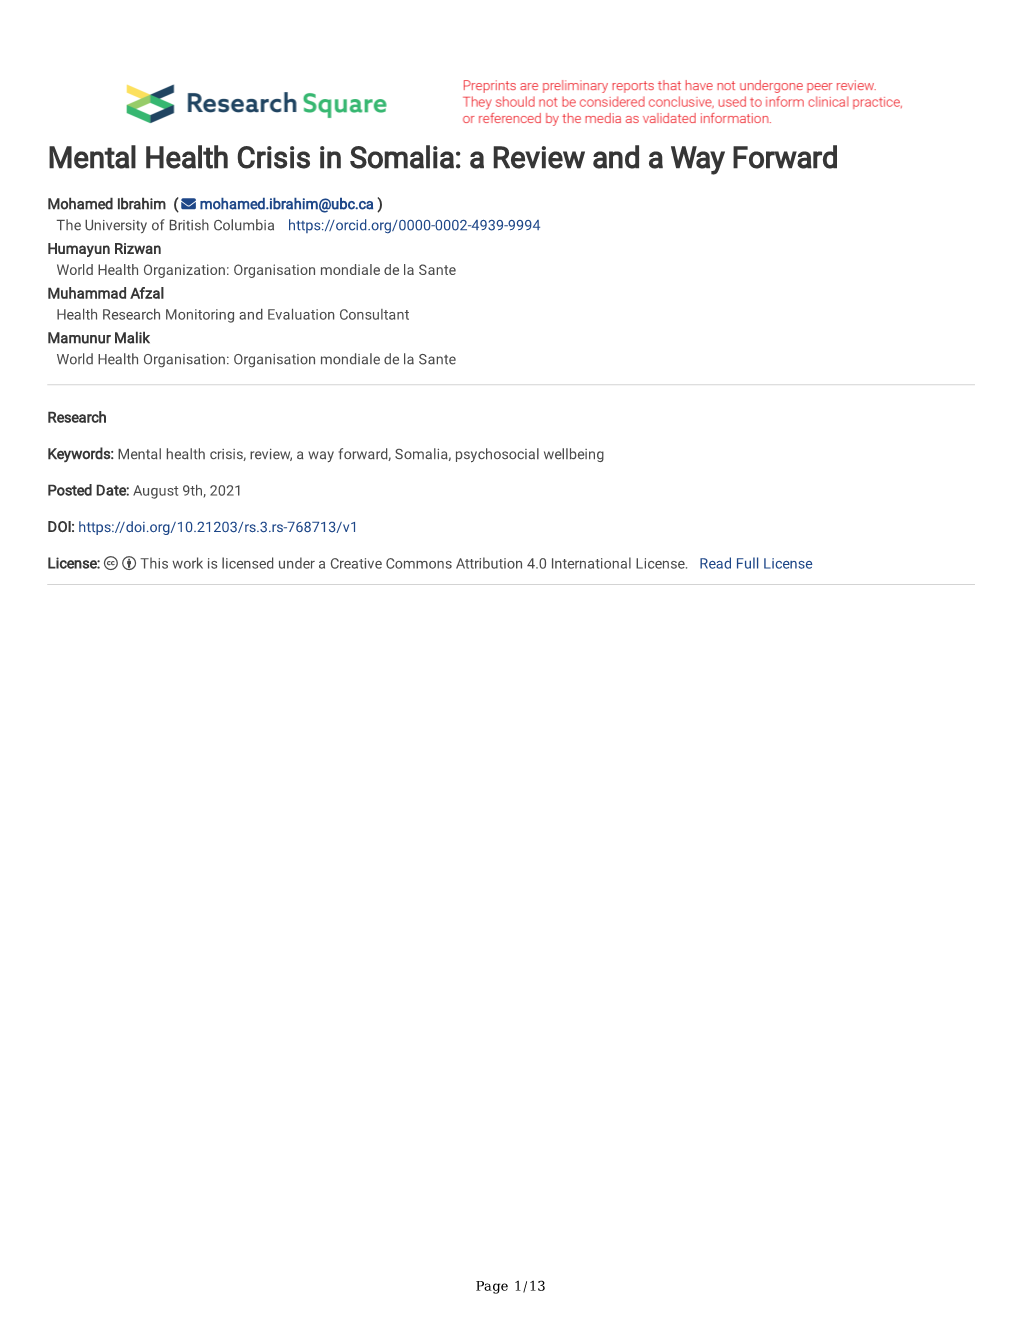 Mental Health Crisis in Somalia: a Review and a Way Forward